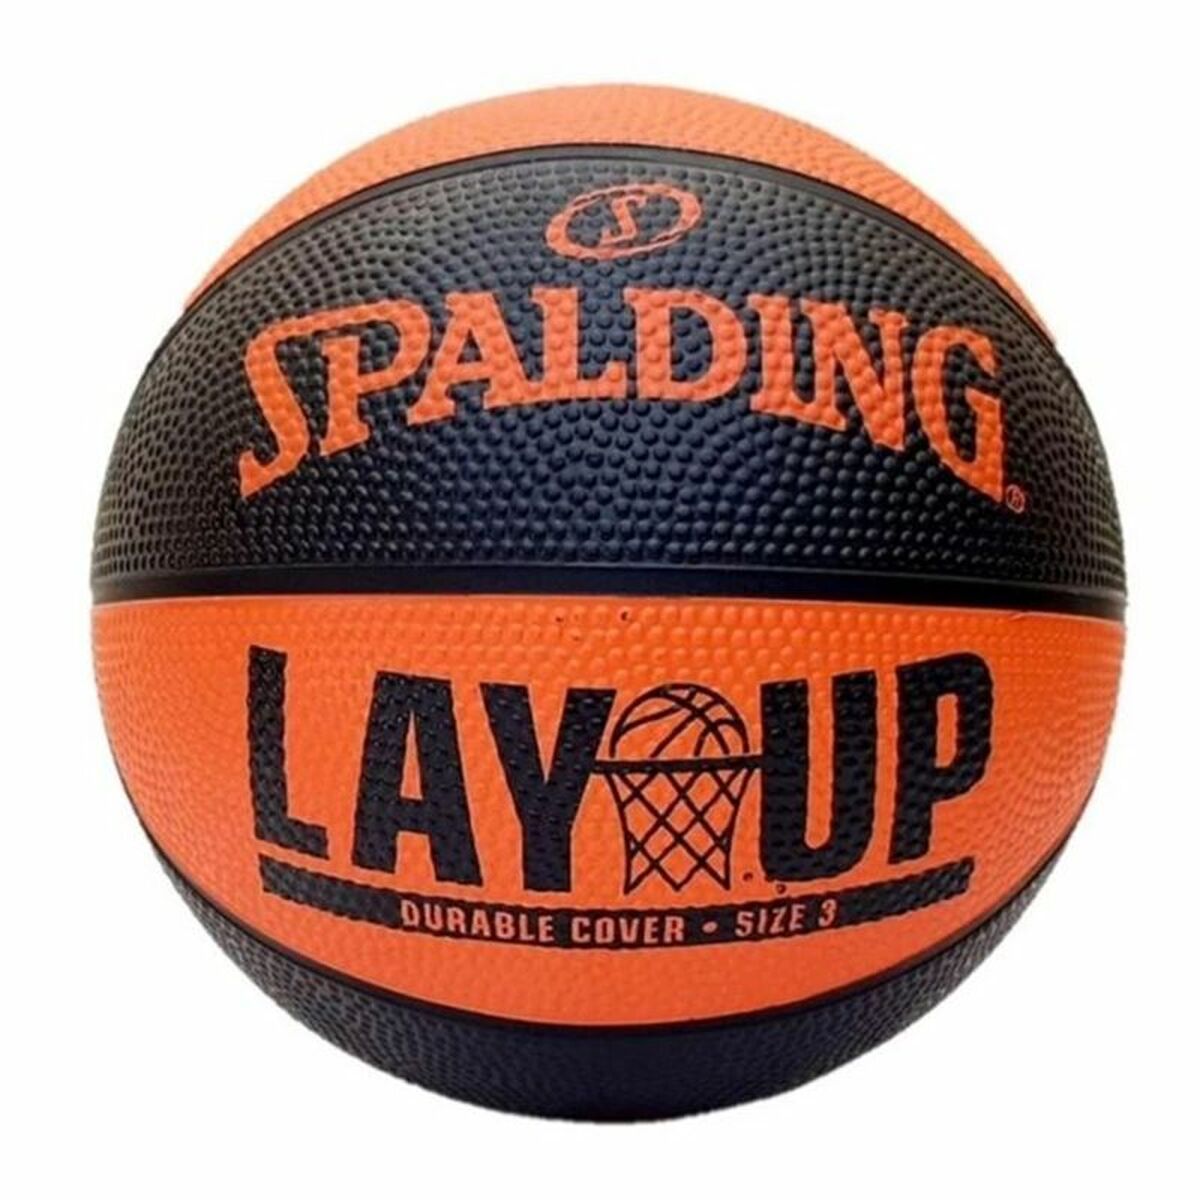 Basketball Spalding Layup TF-50 Orange Haut (Größe 3)